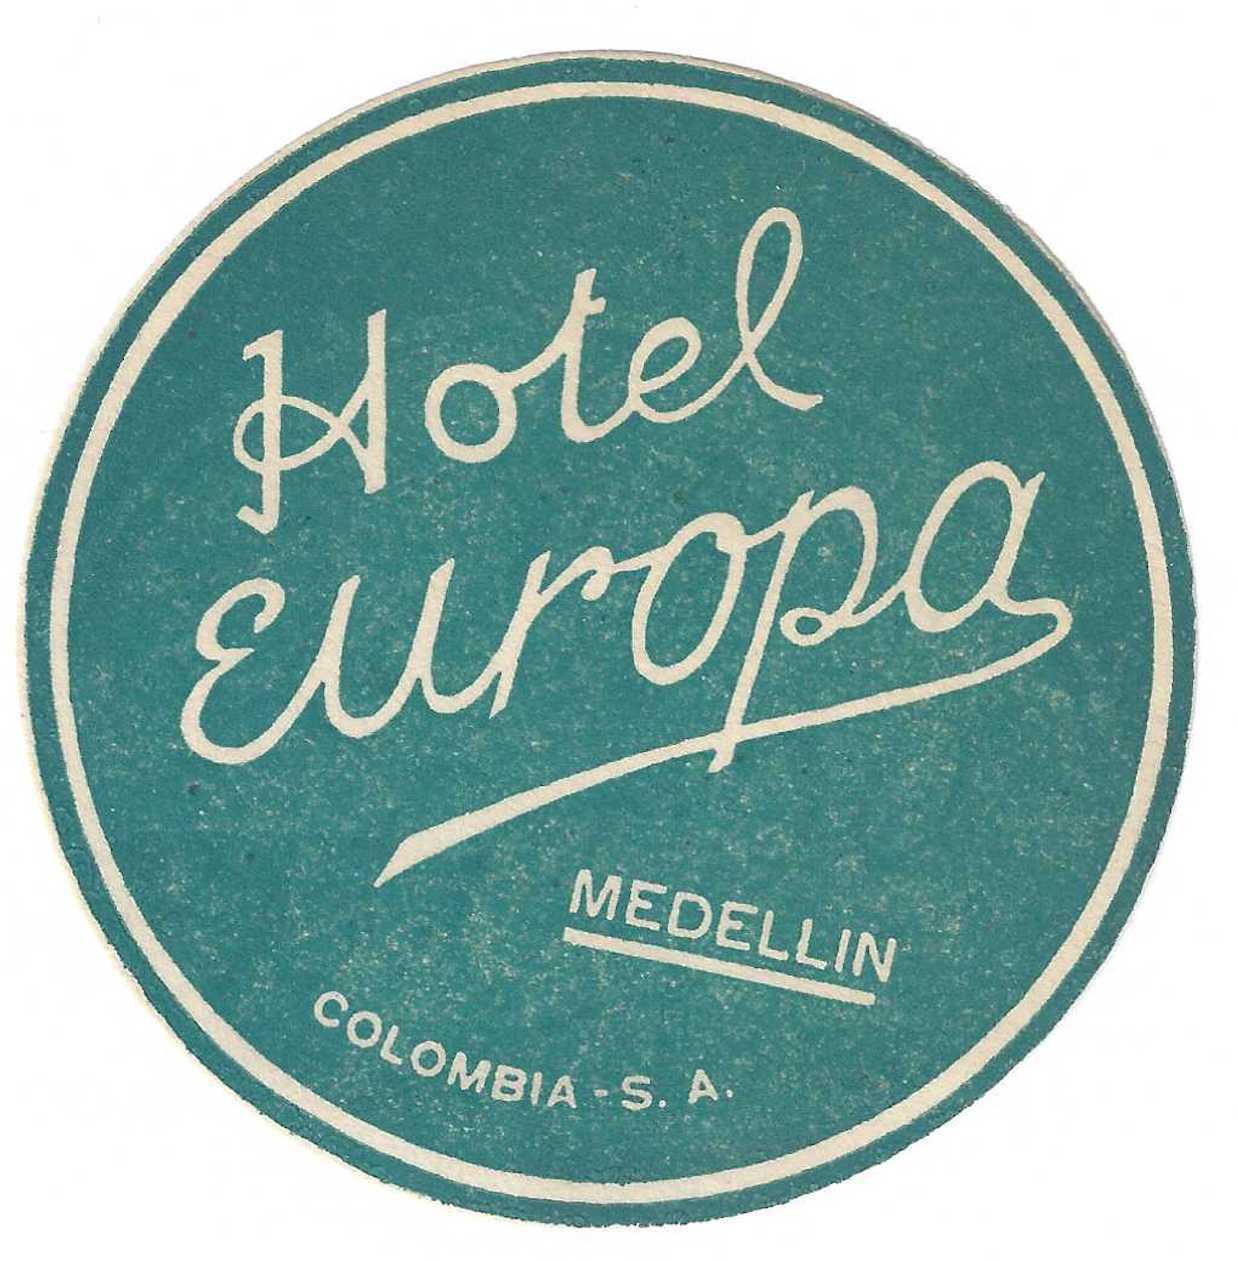 Hotel Europa, Medellin, Colombia, Hotel Label, Unused, Size: 82 mm 